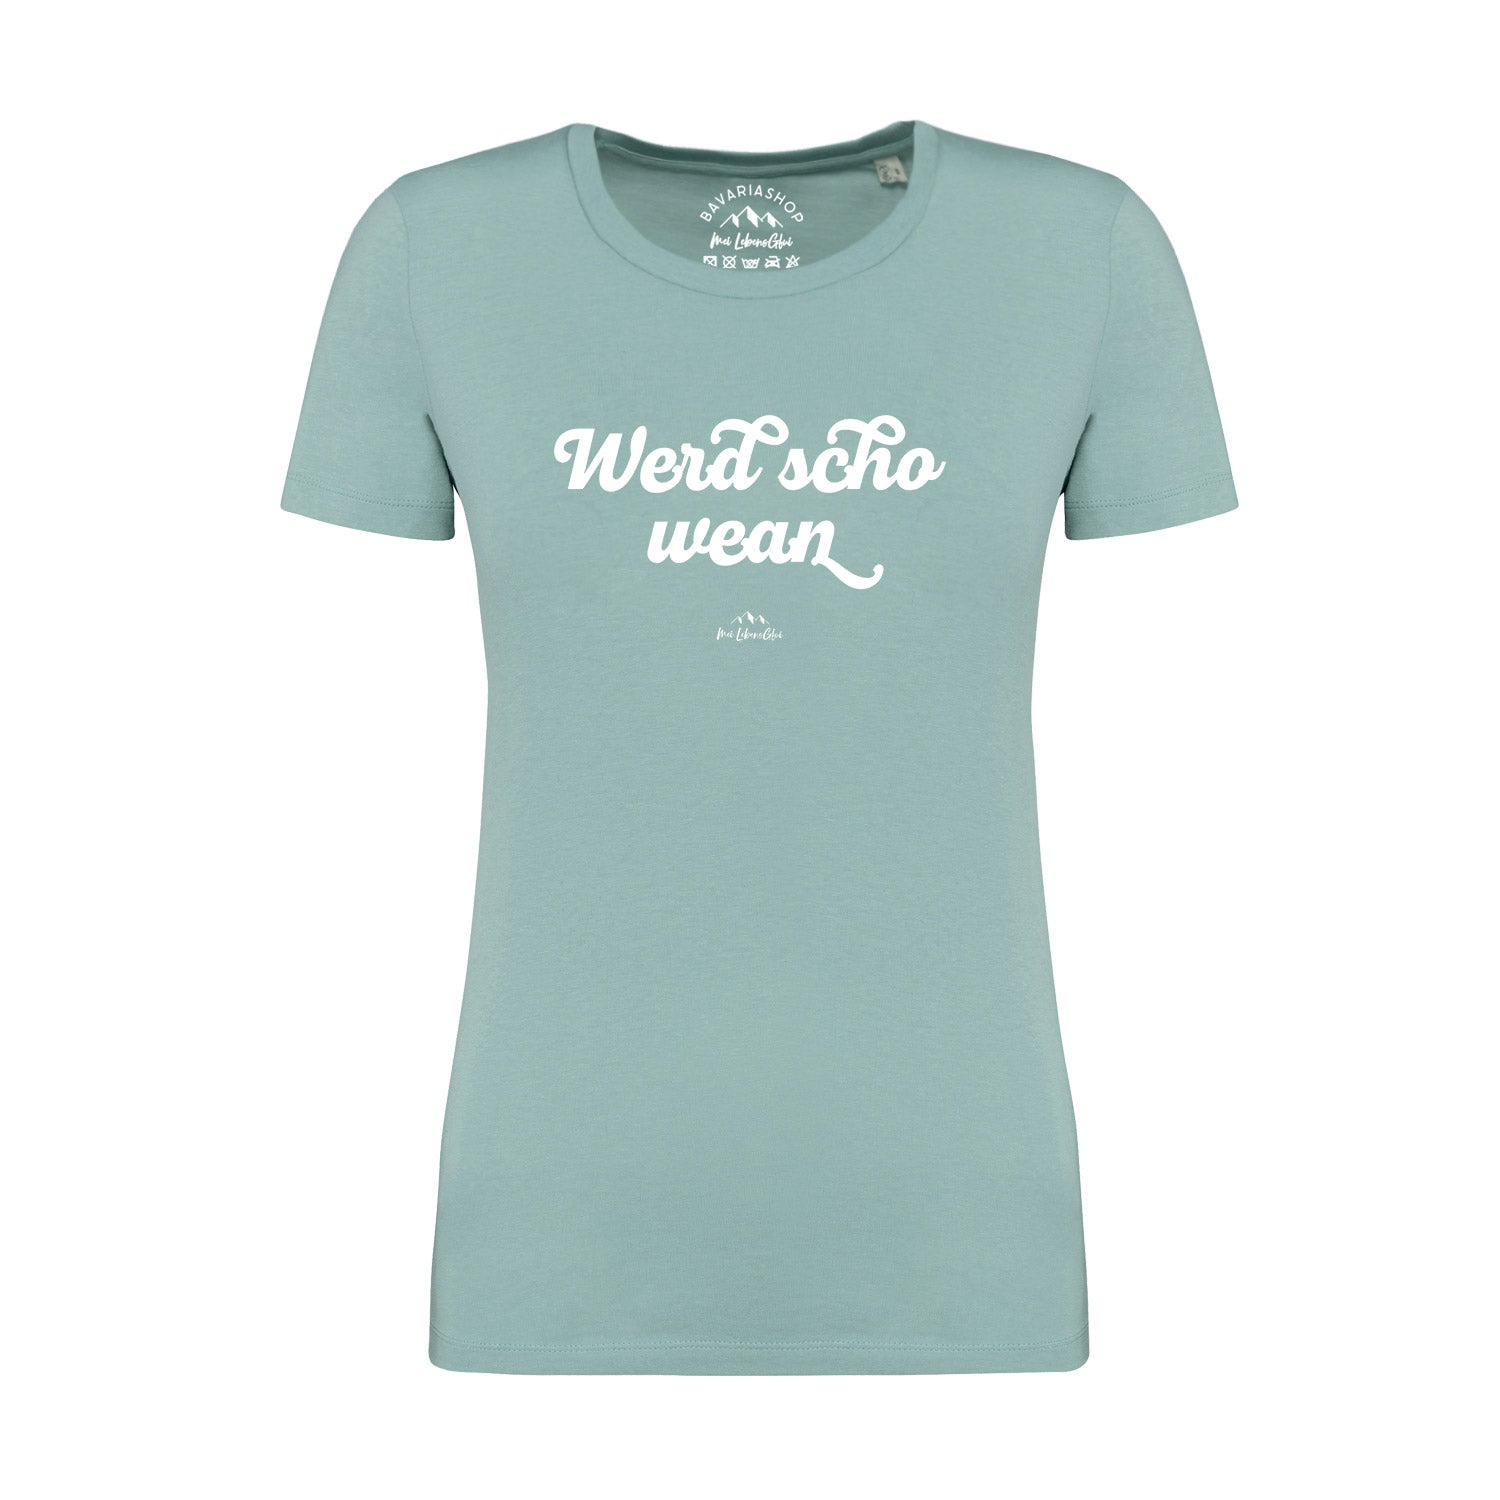 Damen T-Shirt "Wead scho wean"